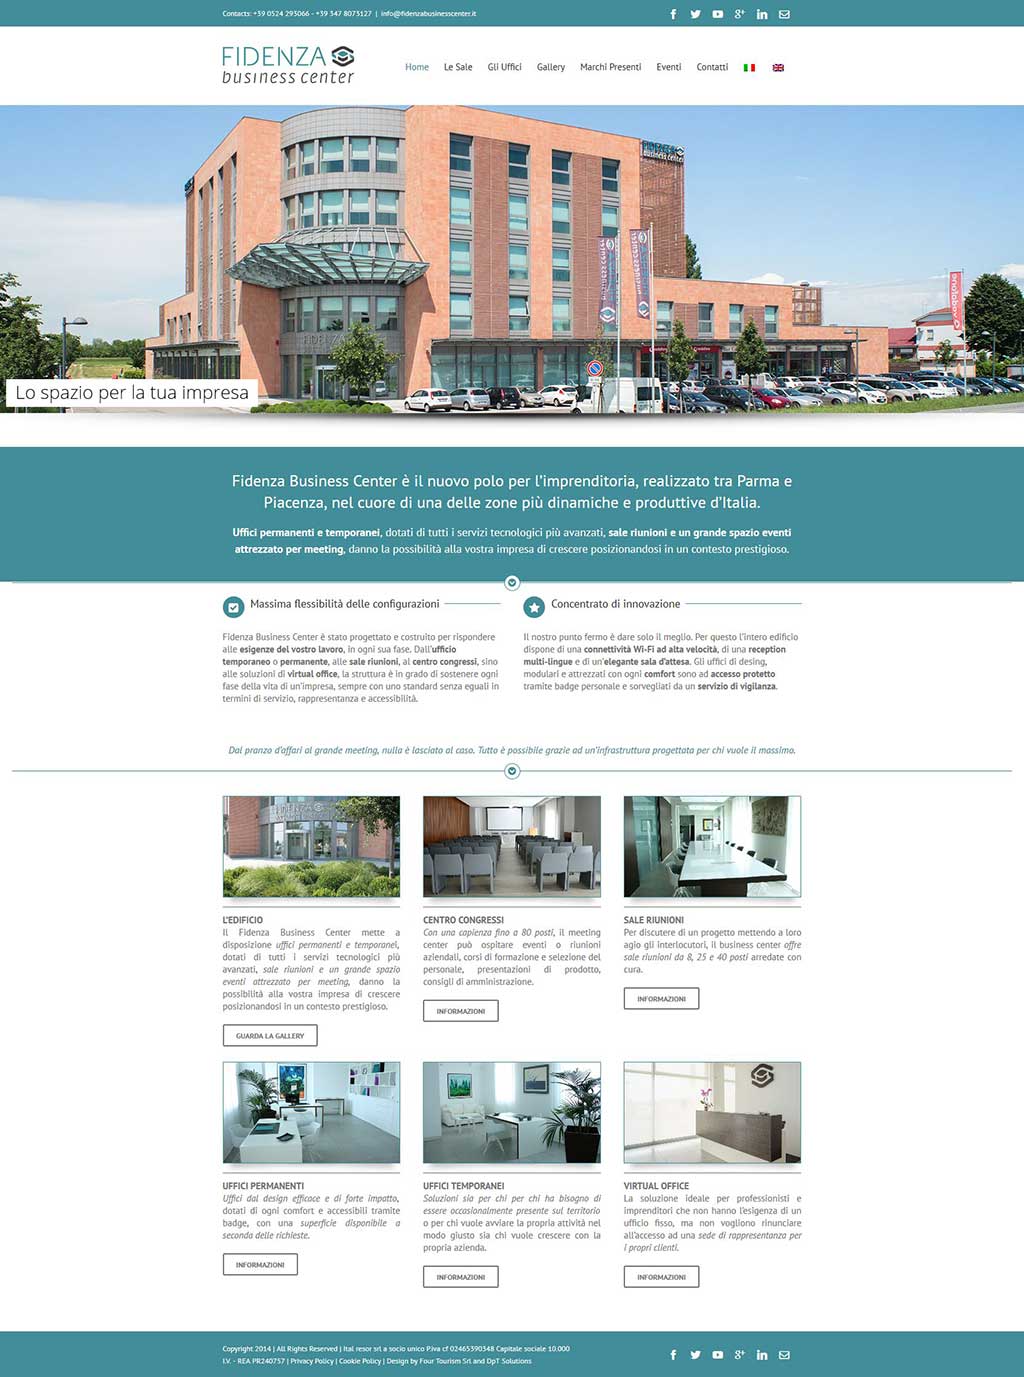 Fidenza Business Center website centro congressi